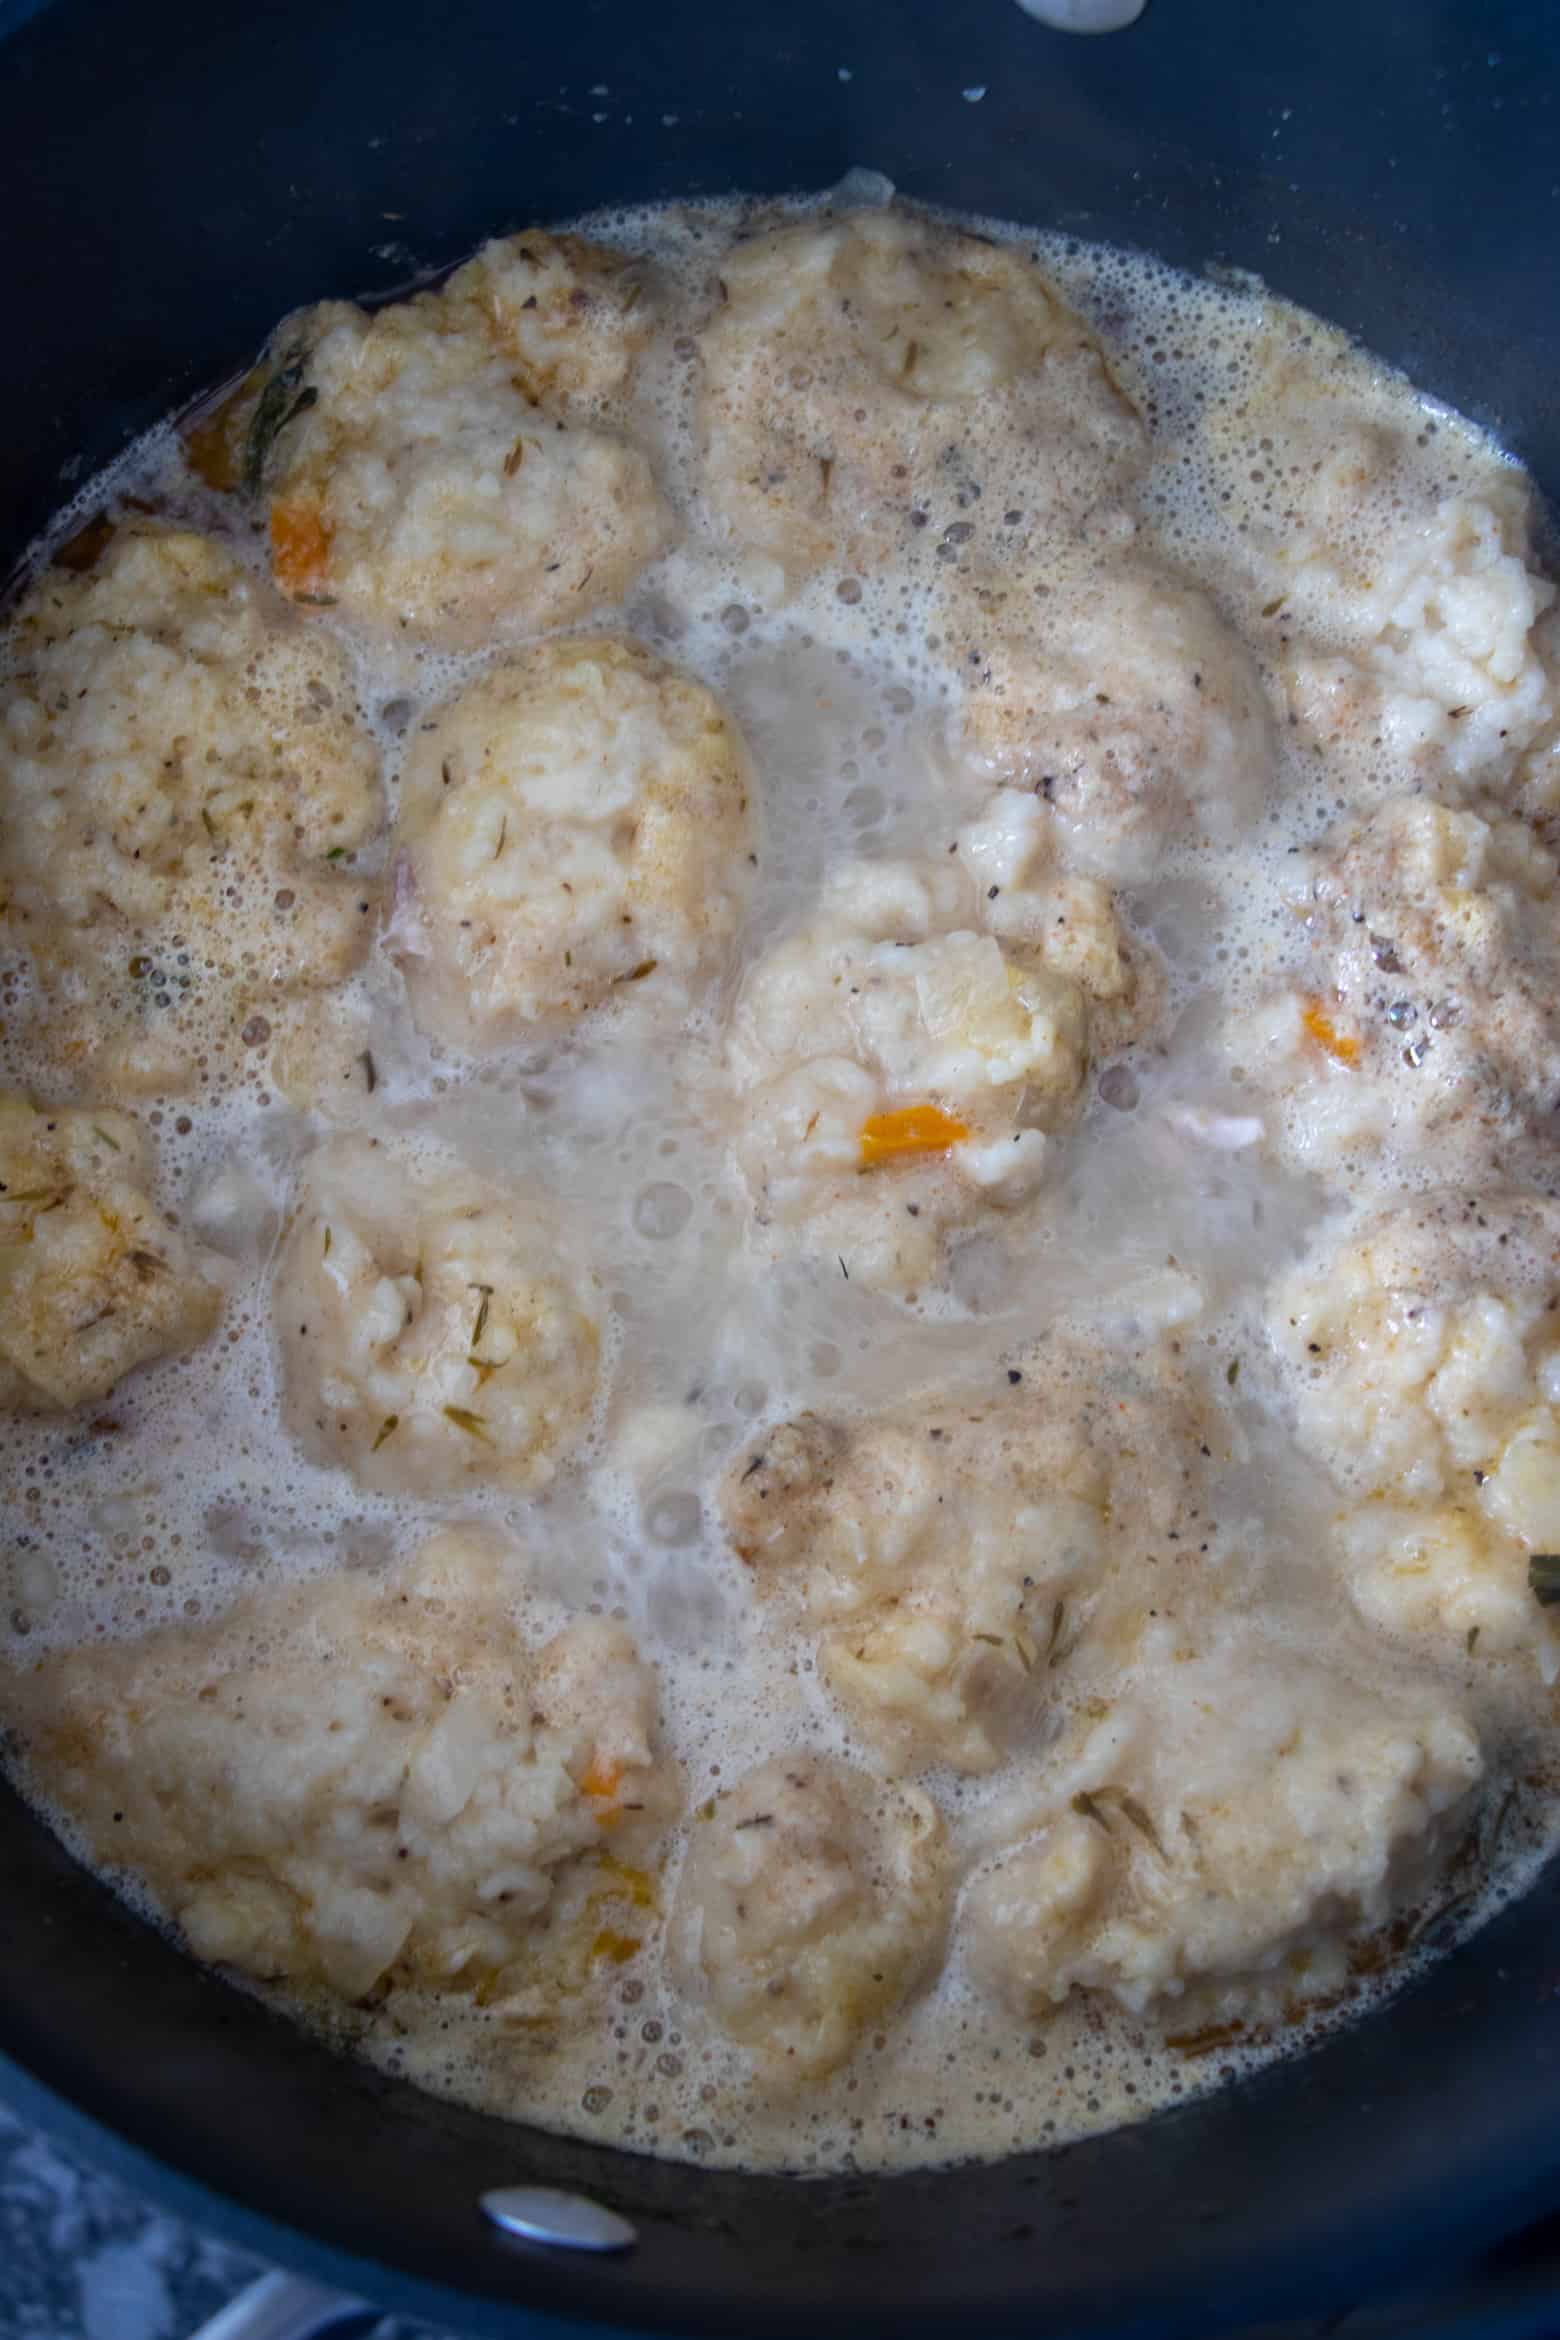 Dumplings cooking in broth in a pot.